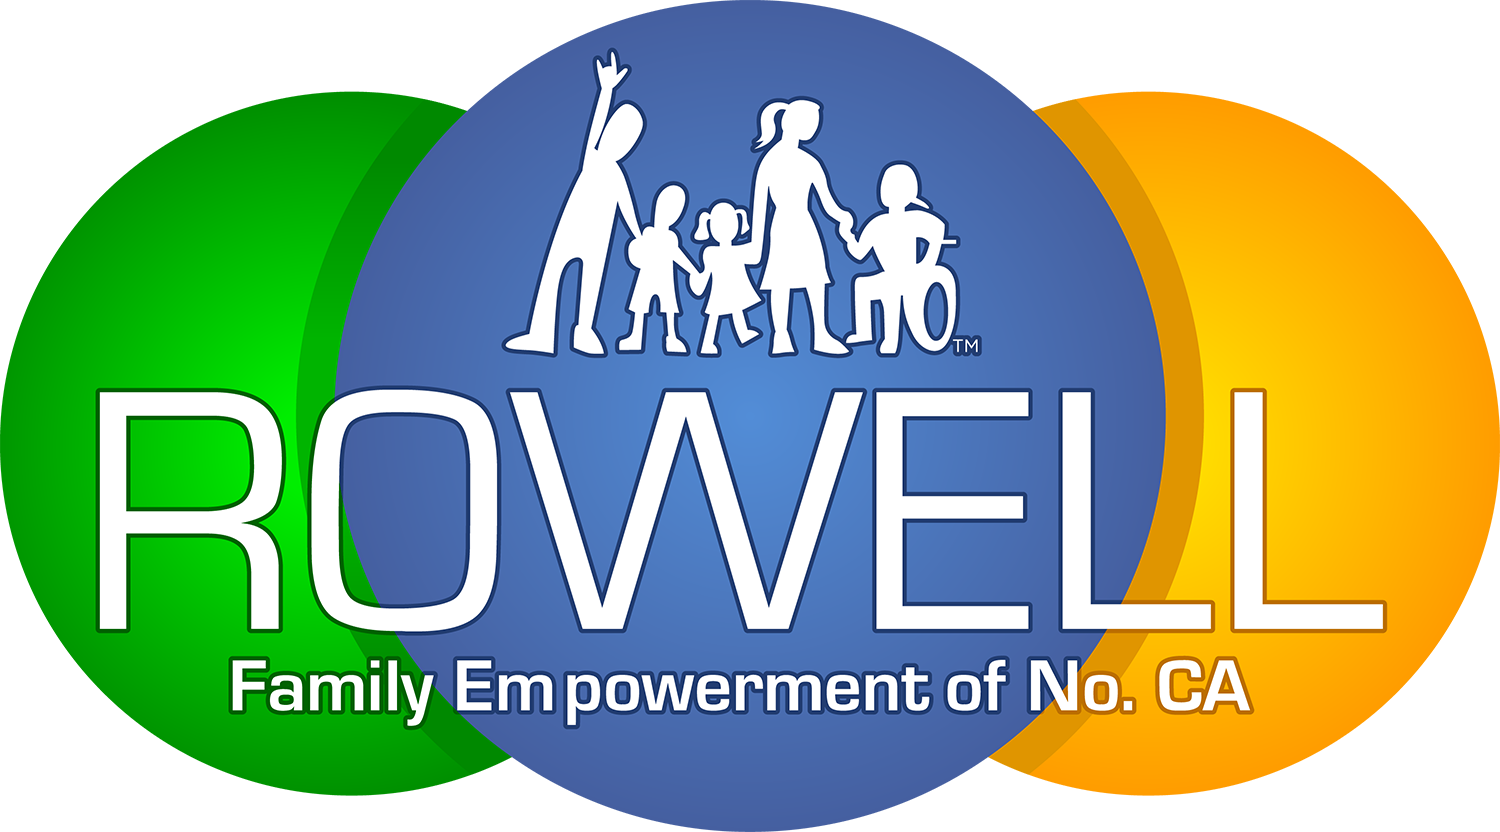 Rowell Logo